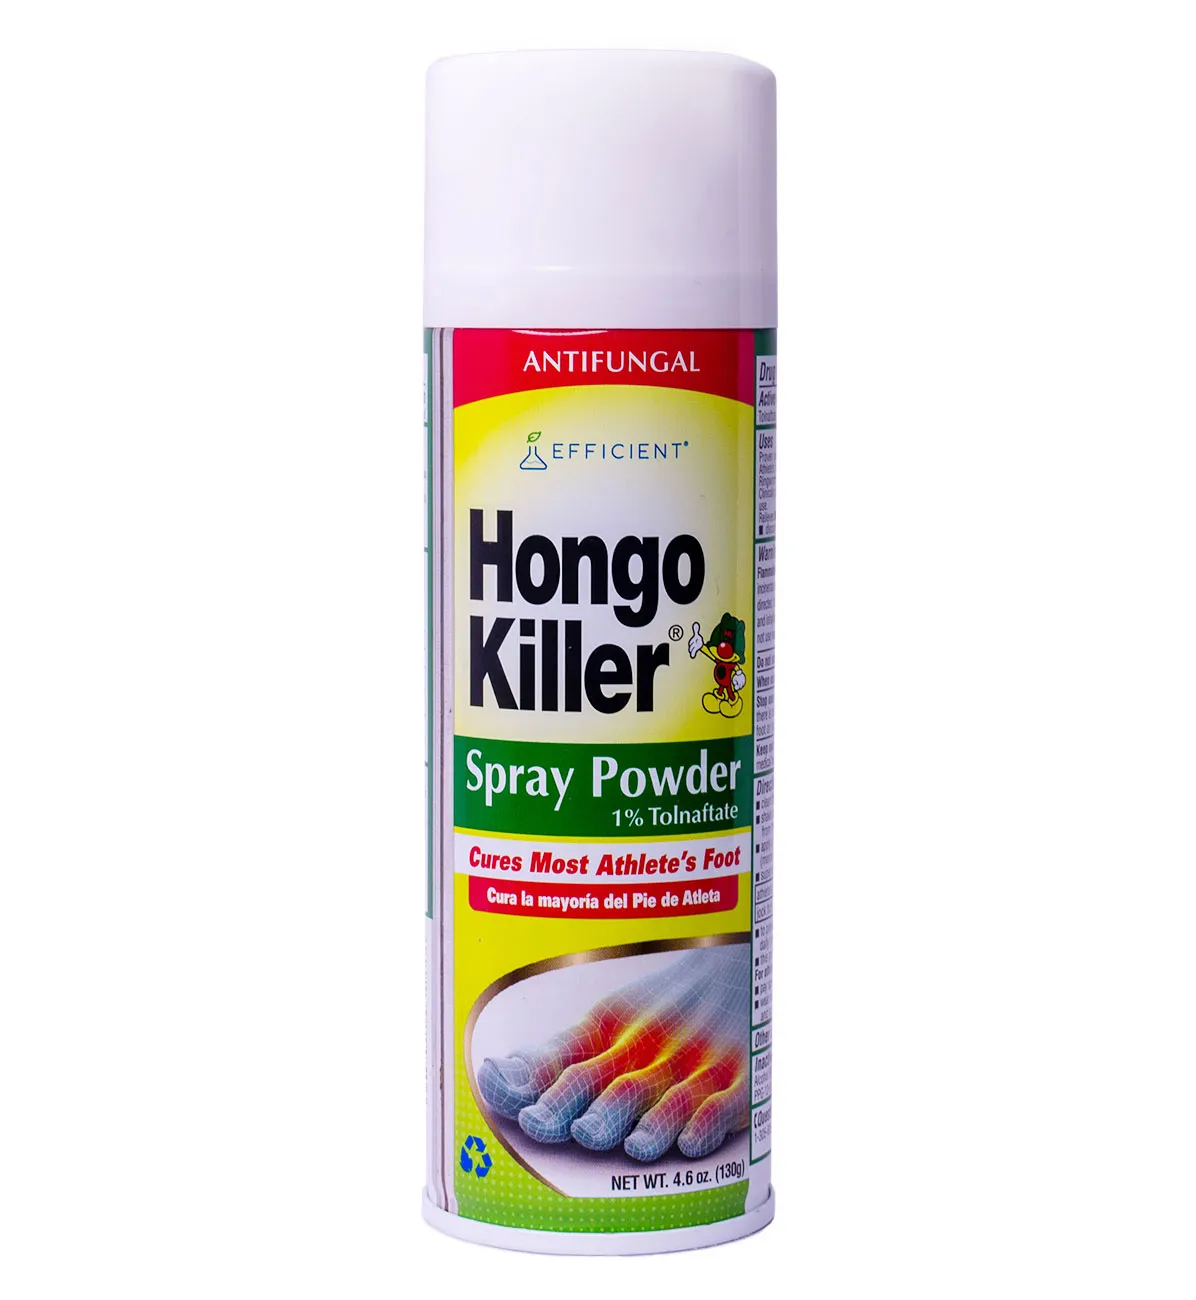 Hongo Killer Antifungal Spray Powder _ Athelets Foot and Ring Worm Treatment _ 130g